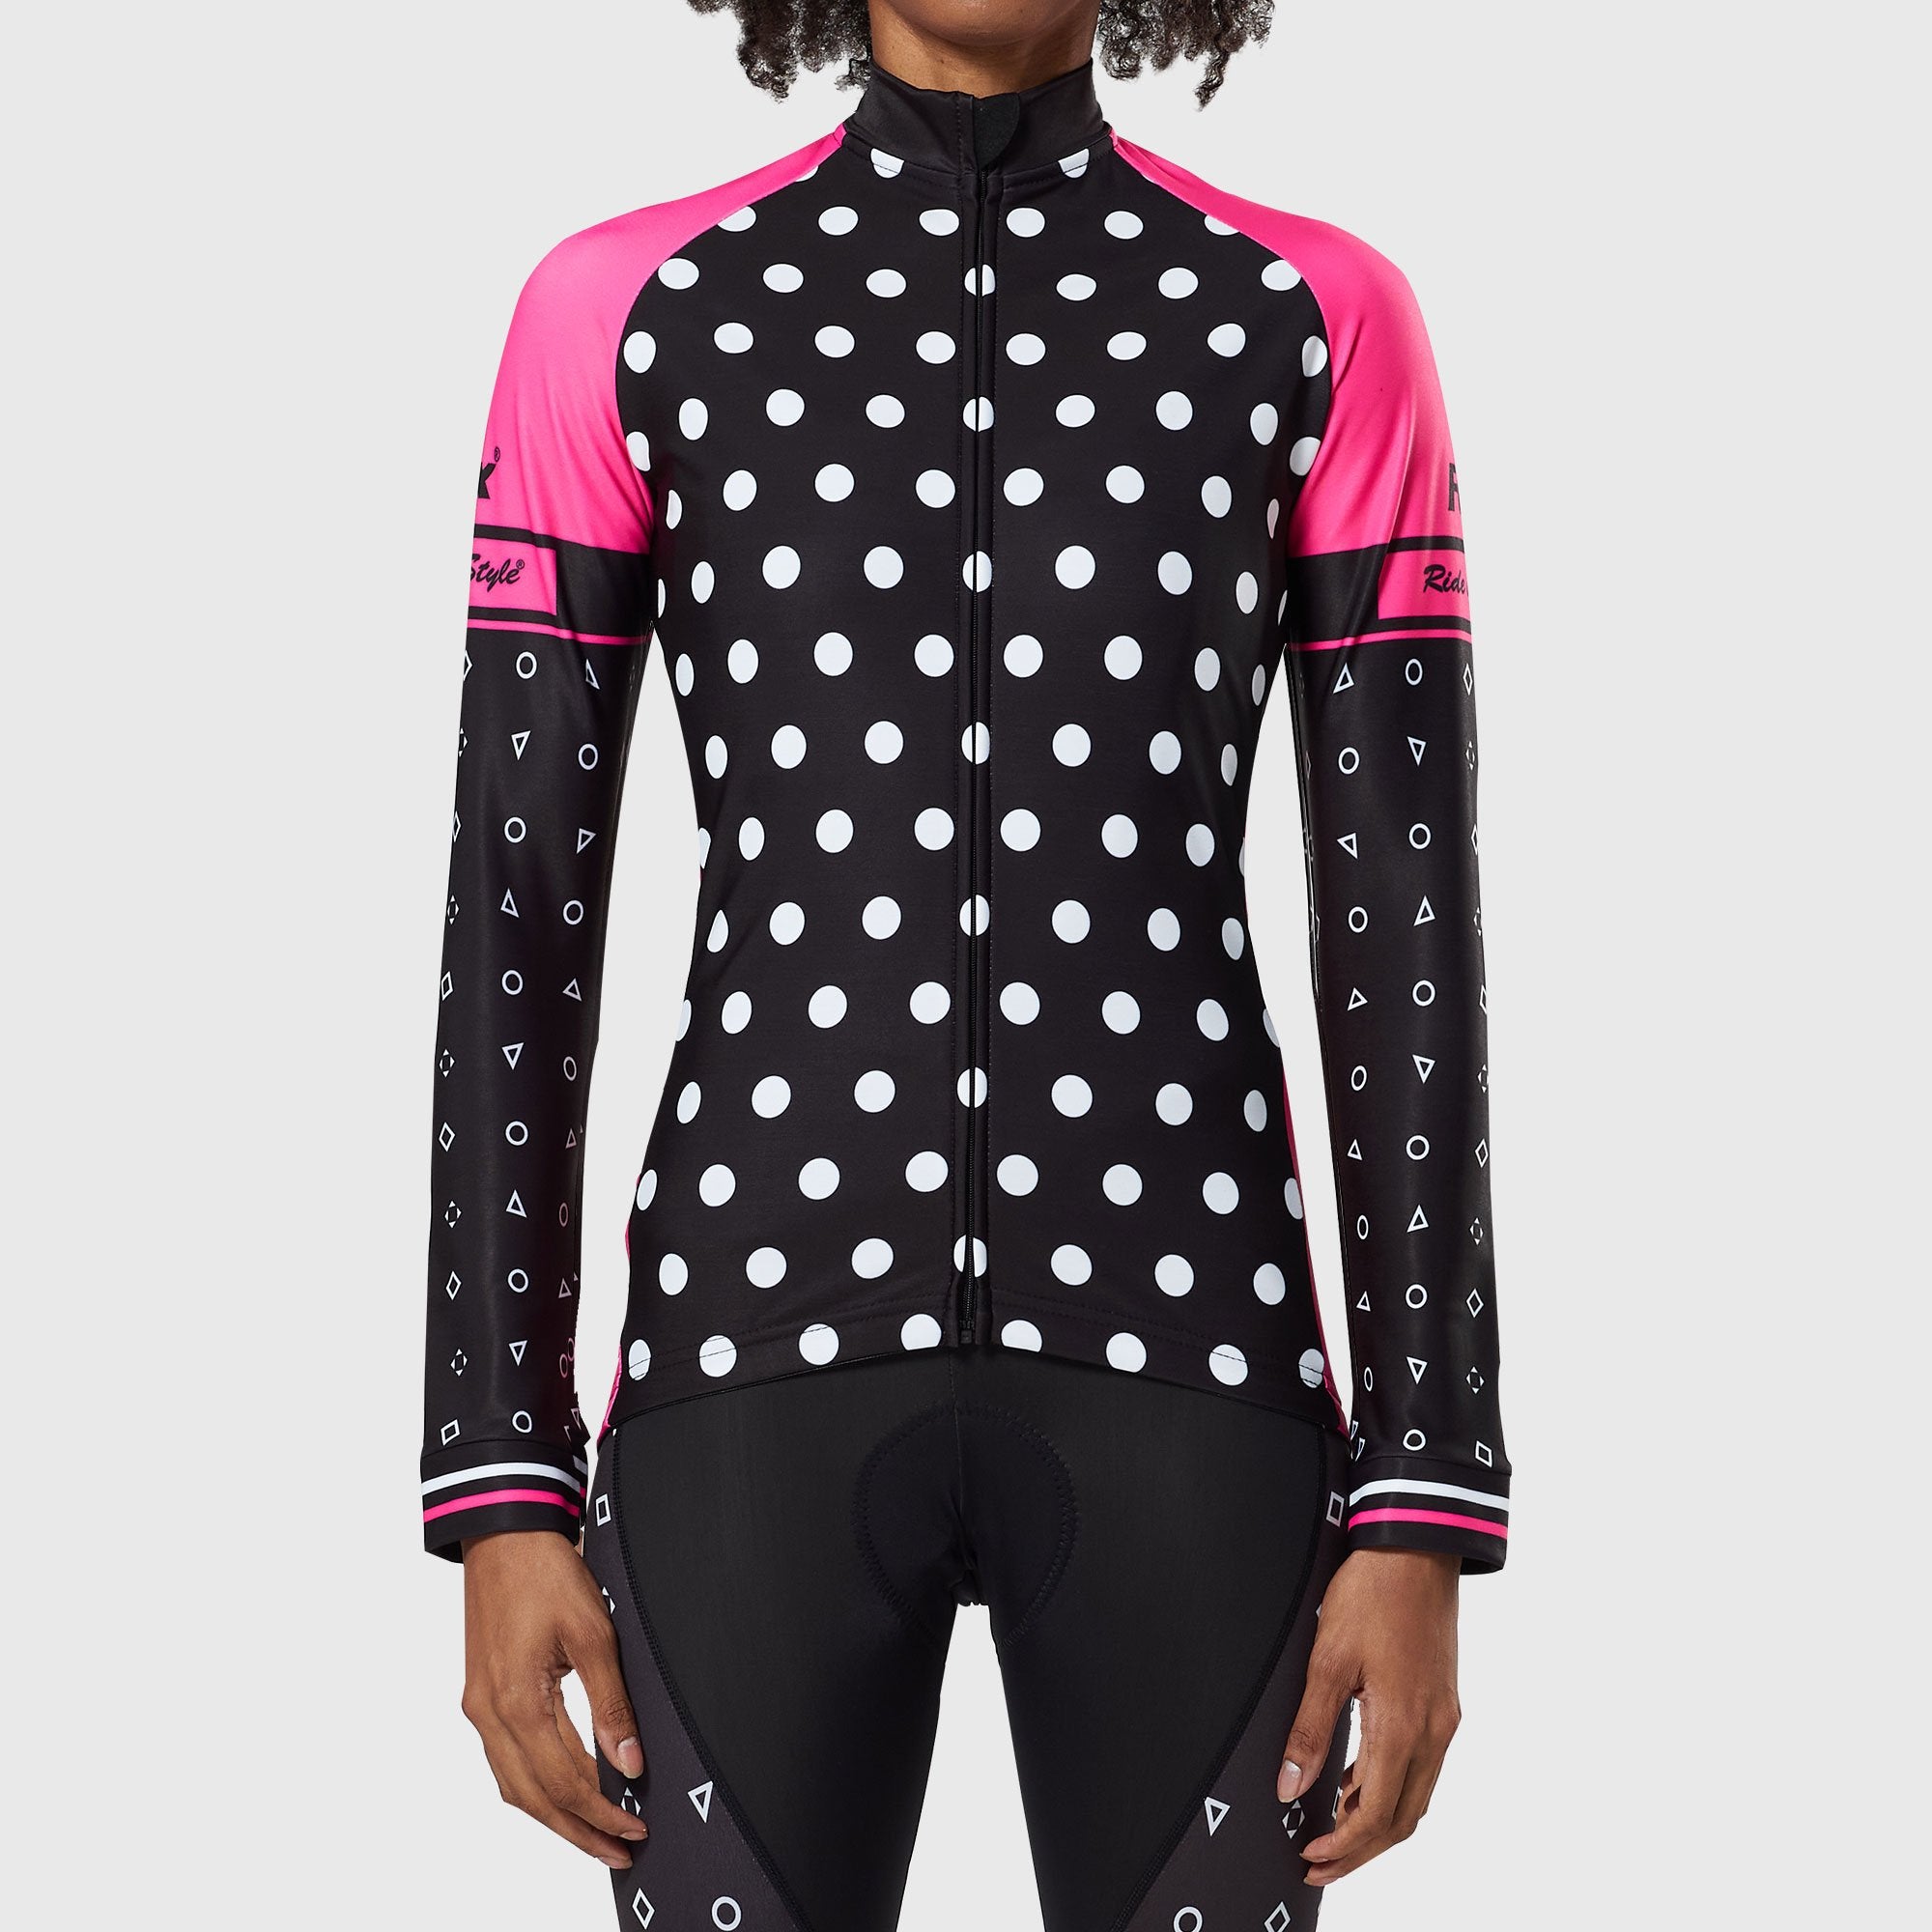 Fdx Polka Dots Pink Women's Long Sleeve Winter Cycling Jersey